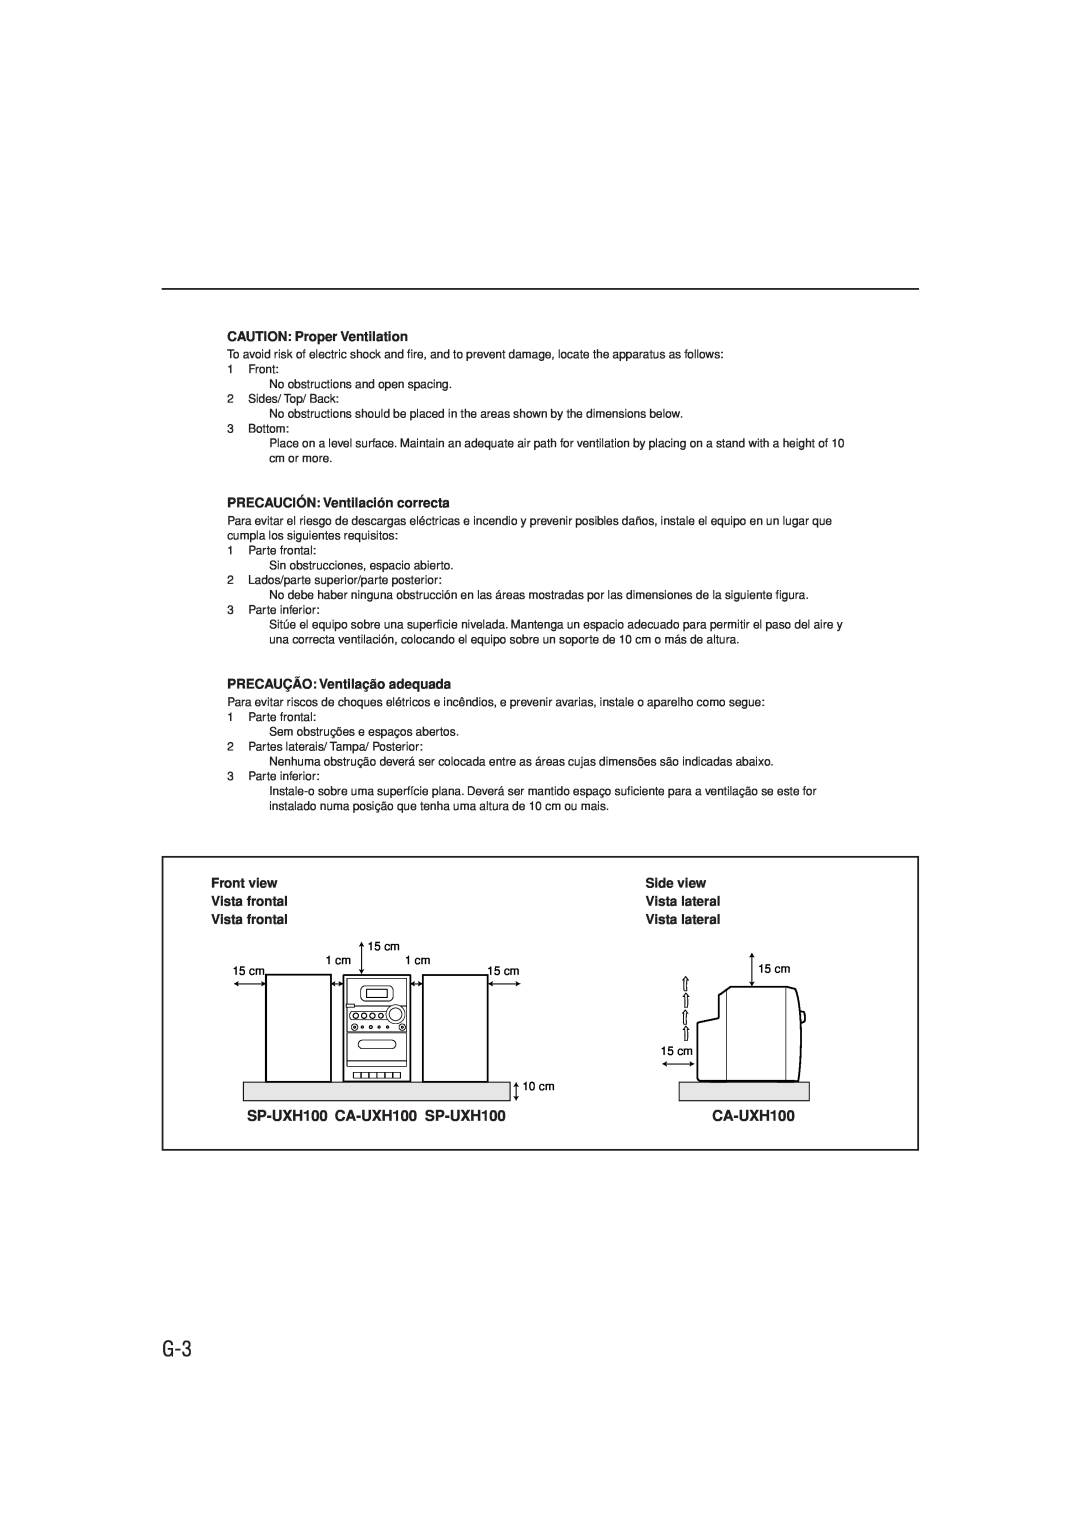 JVC UX-H100 manual SP-UXH100 CA-UXH100 SP-UXH100, CAUTION Proper Ventilation, PRECAUCIÓN: Ventilación correcta 